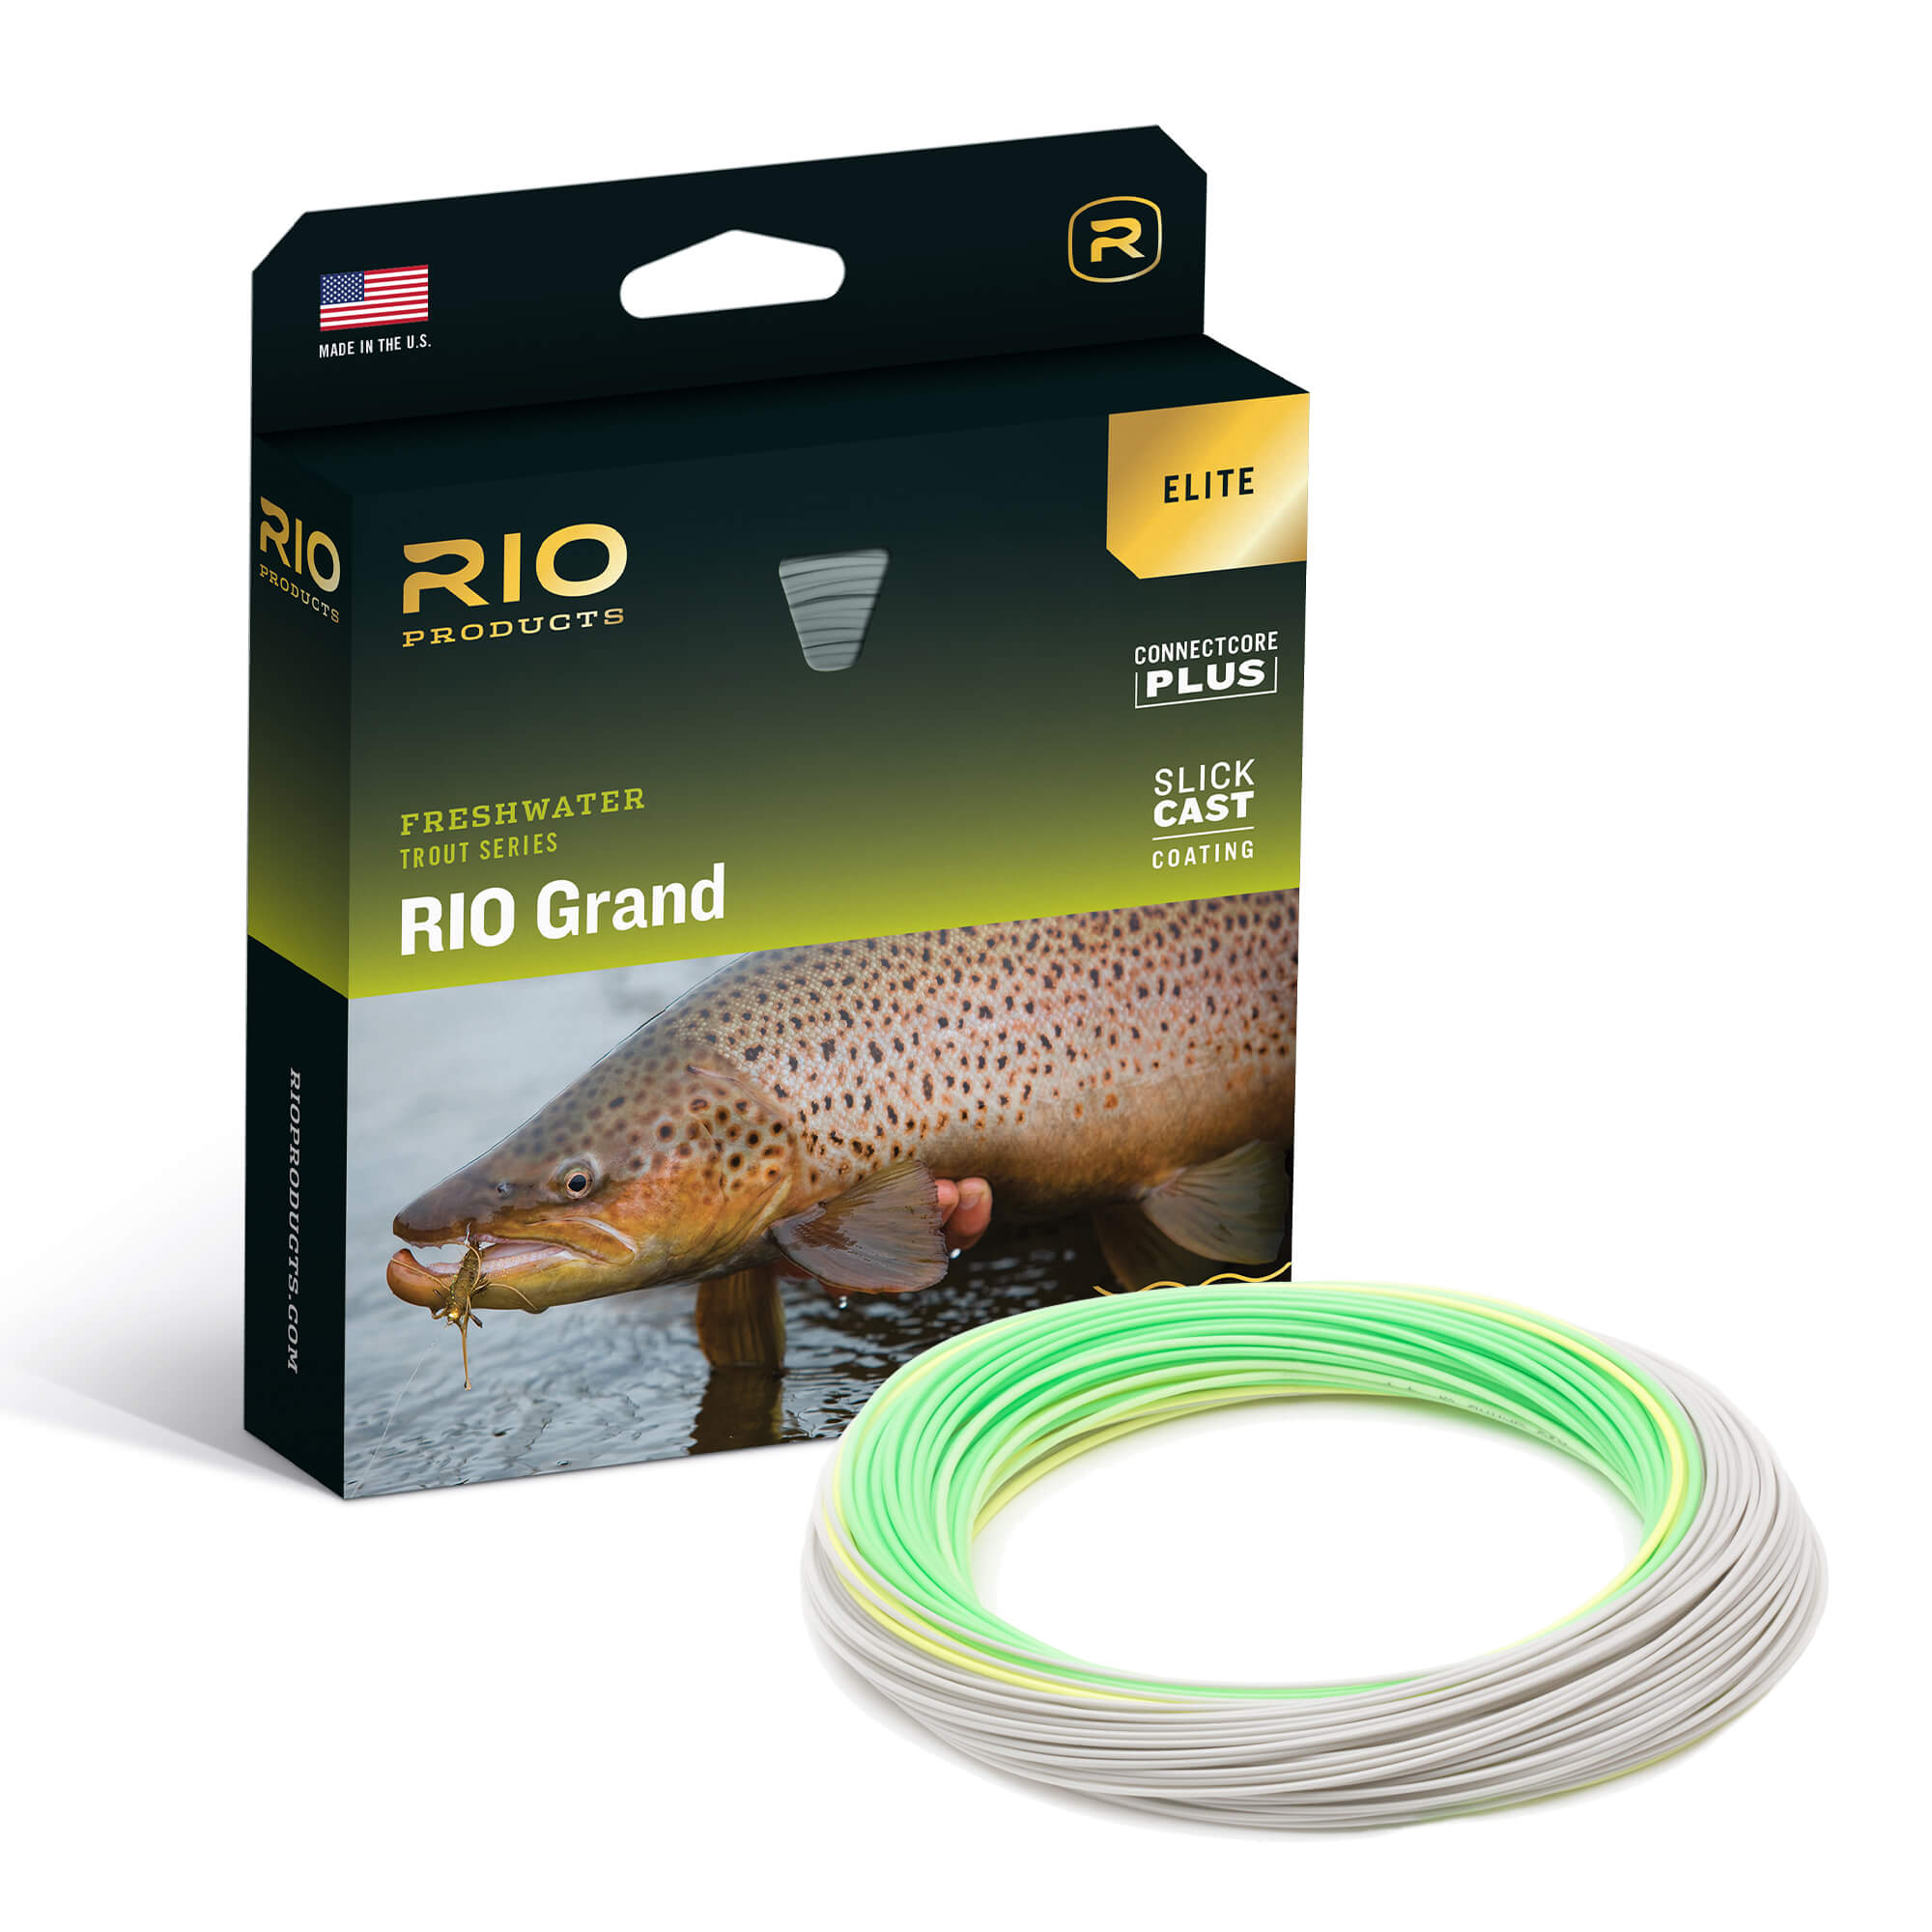 Elite RIO Grand Fly Line – Guide Flyfishing, Fly Fishing Rods, Reels, Sage, Redington, RIO